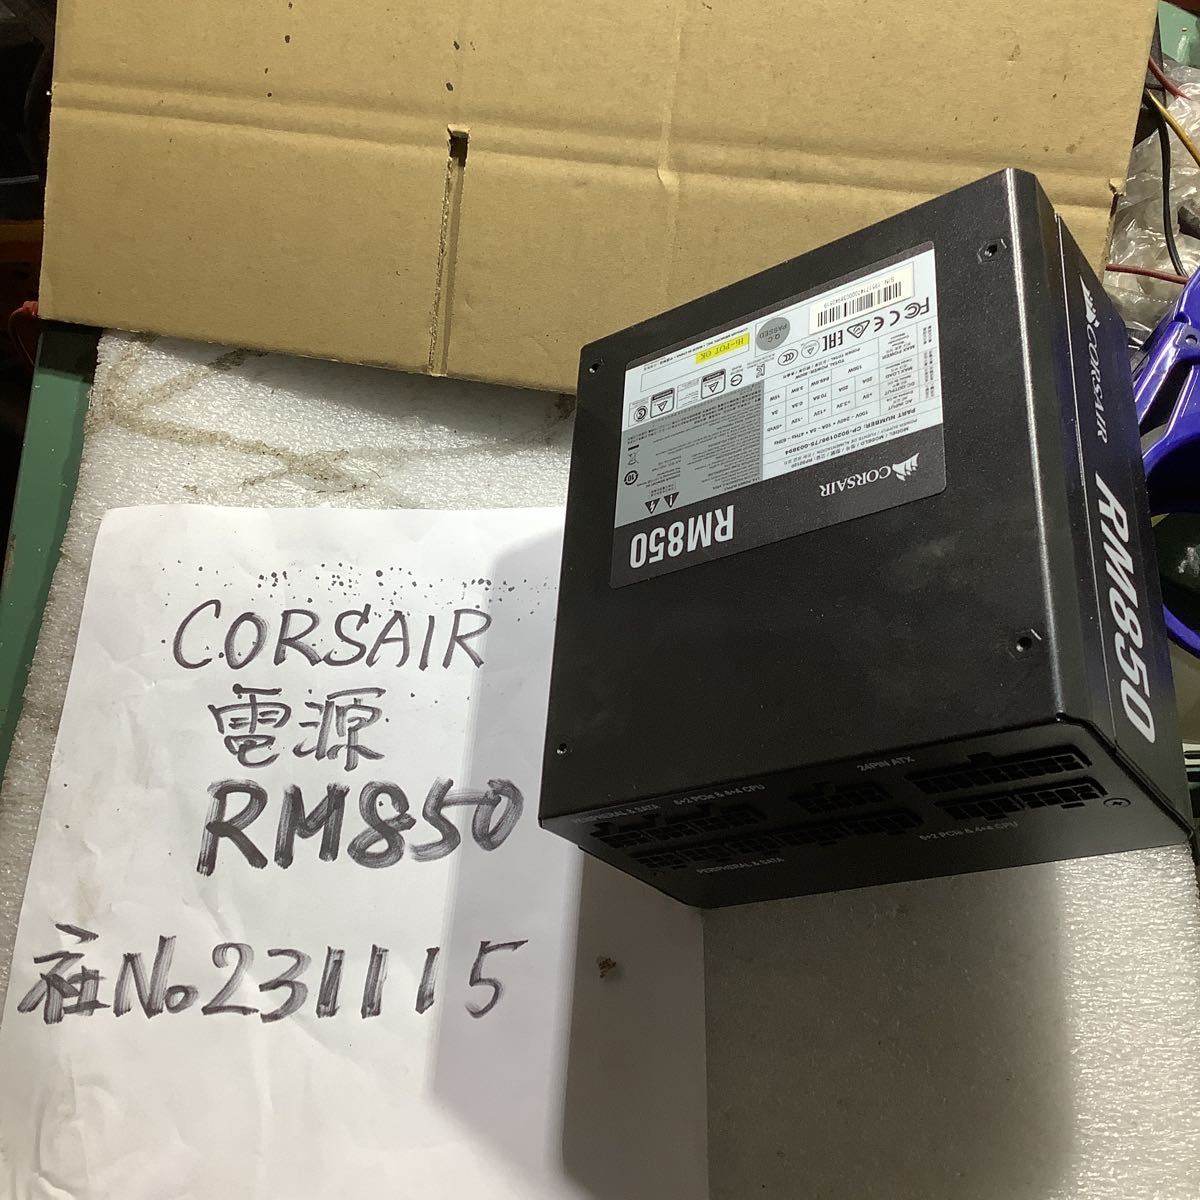 CORSAIR 電源 RM850中古品動作未確認です。サーバーから取り出し品です。